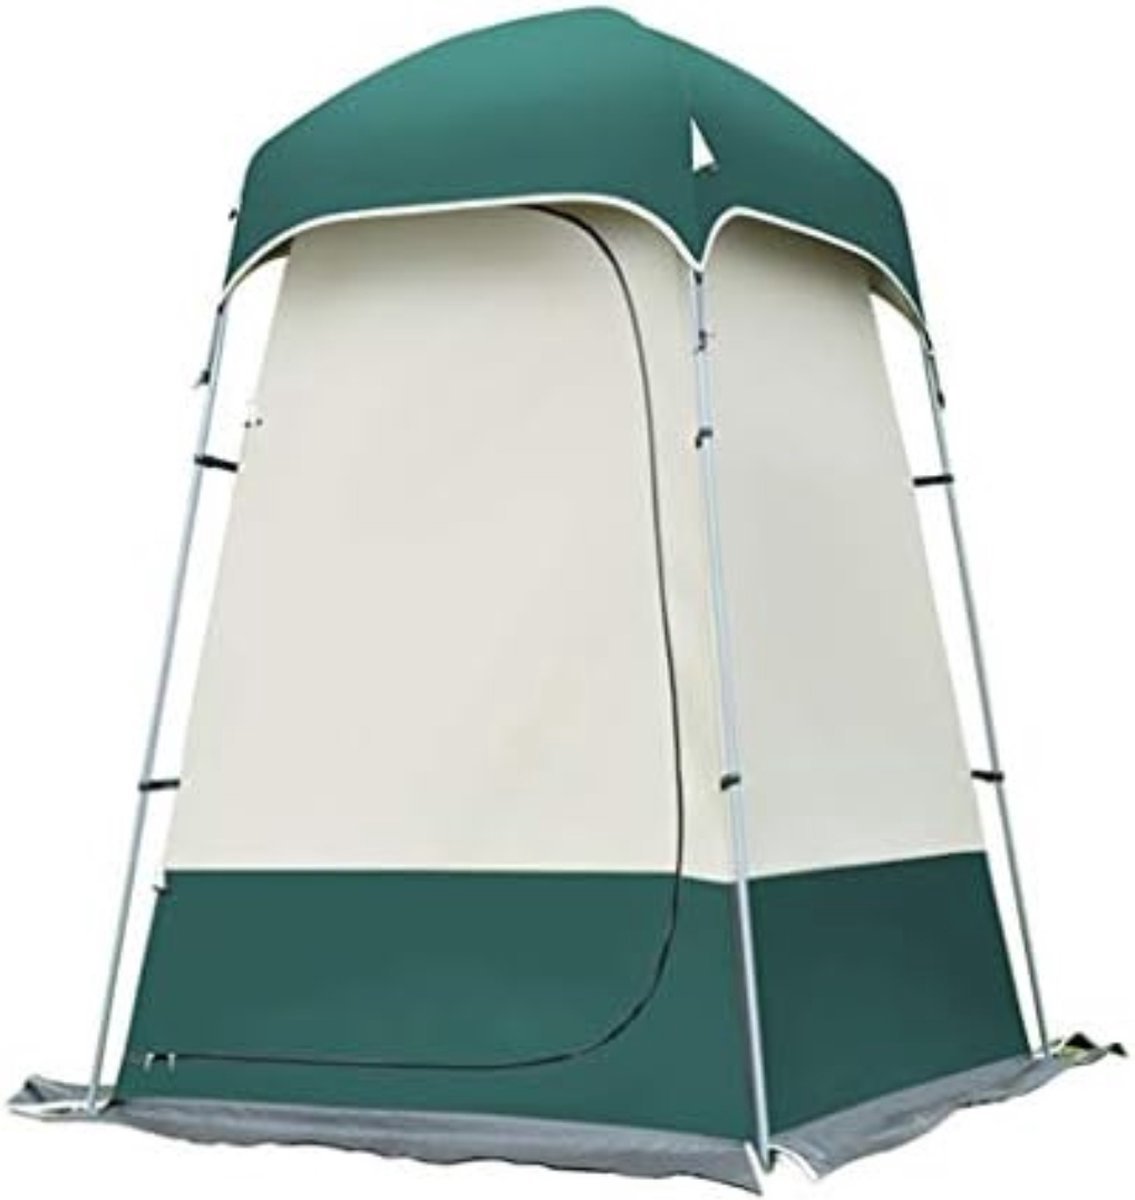 Douchetent - Omkleedtent - Wc tent - Toilettent - Camping - Groen|Wit